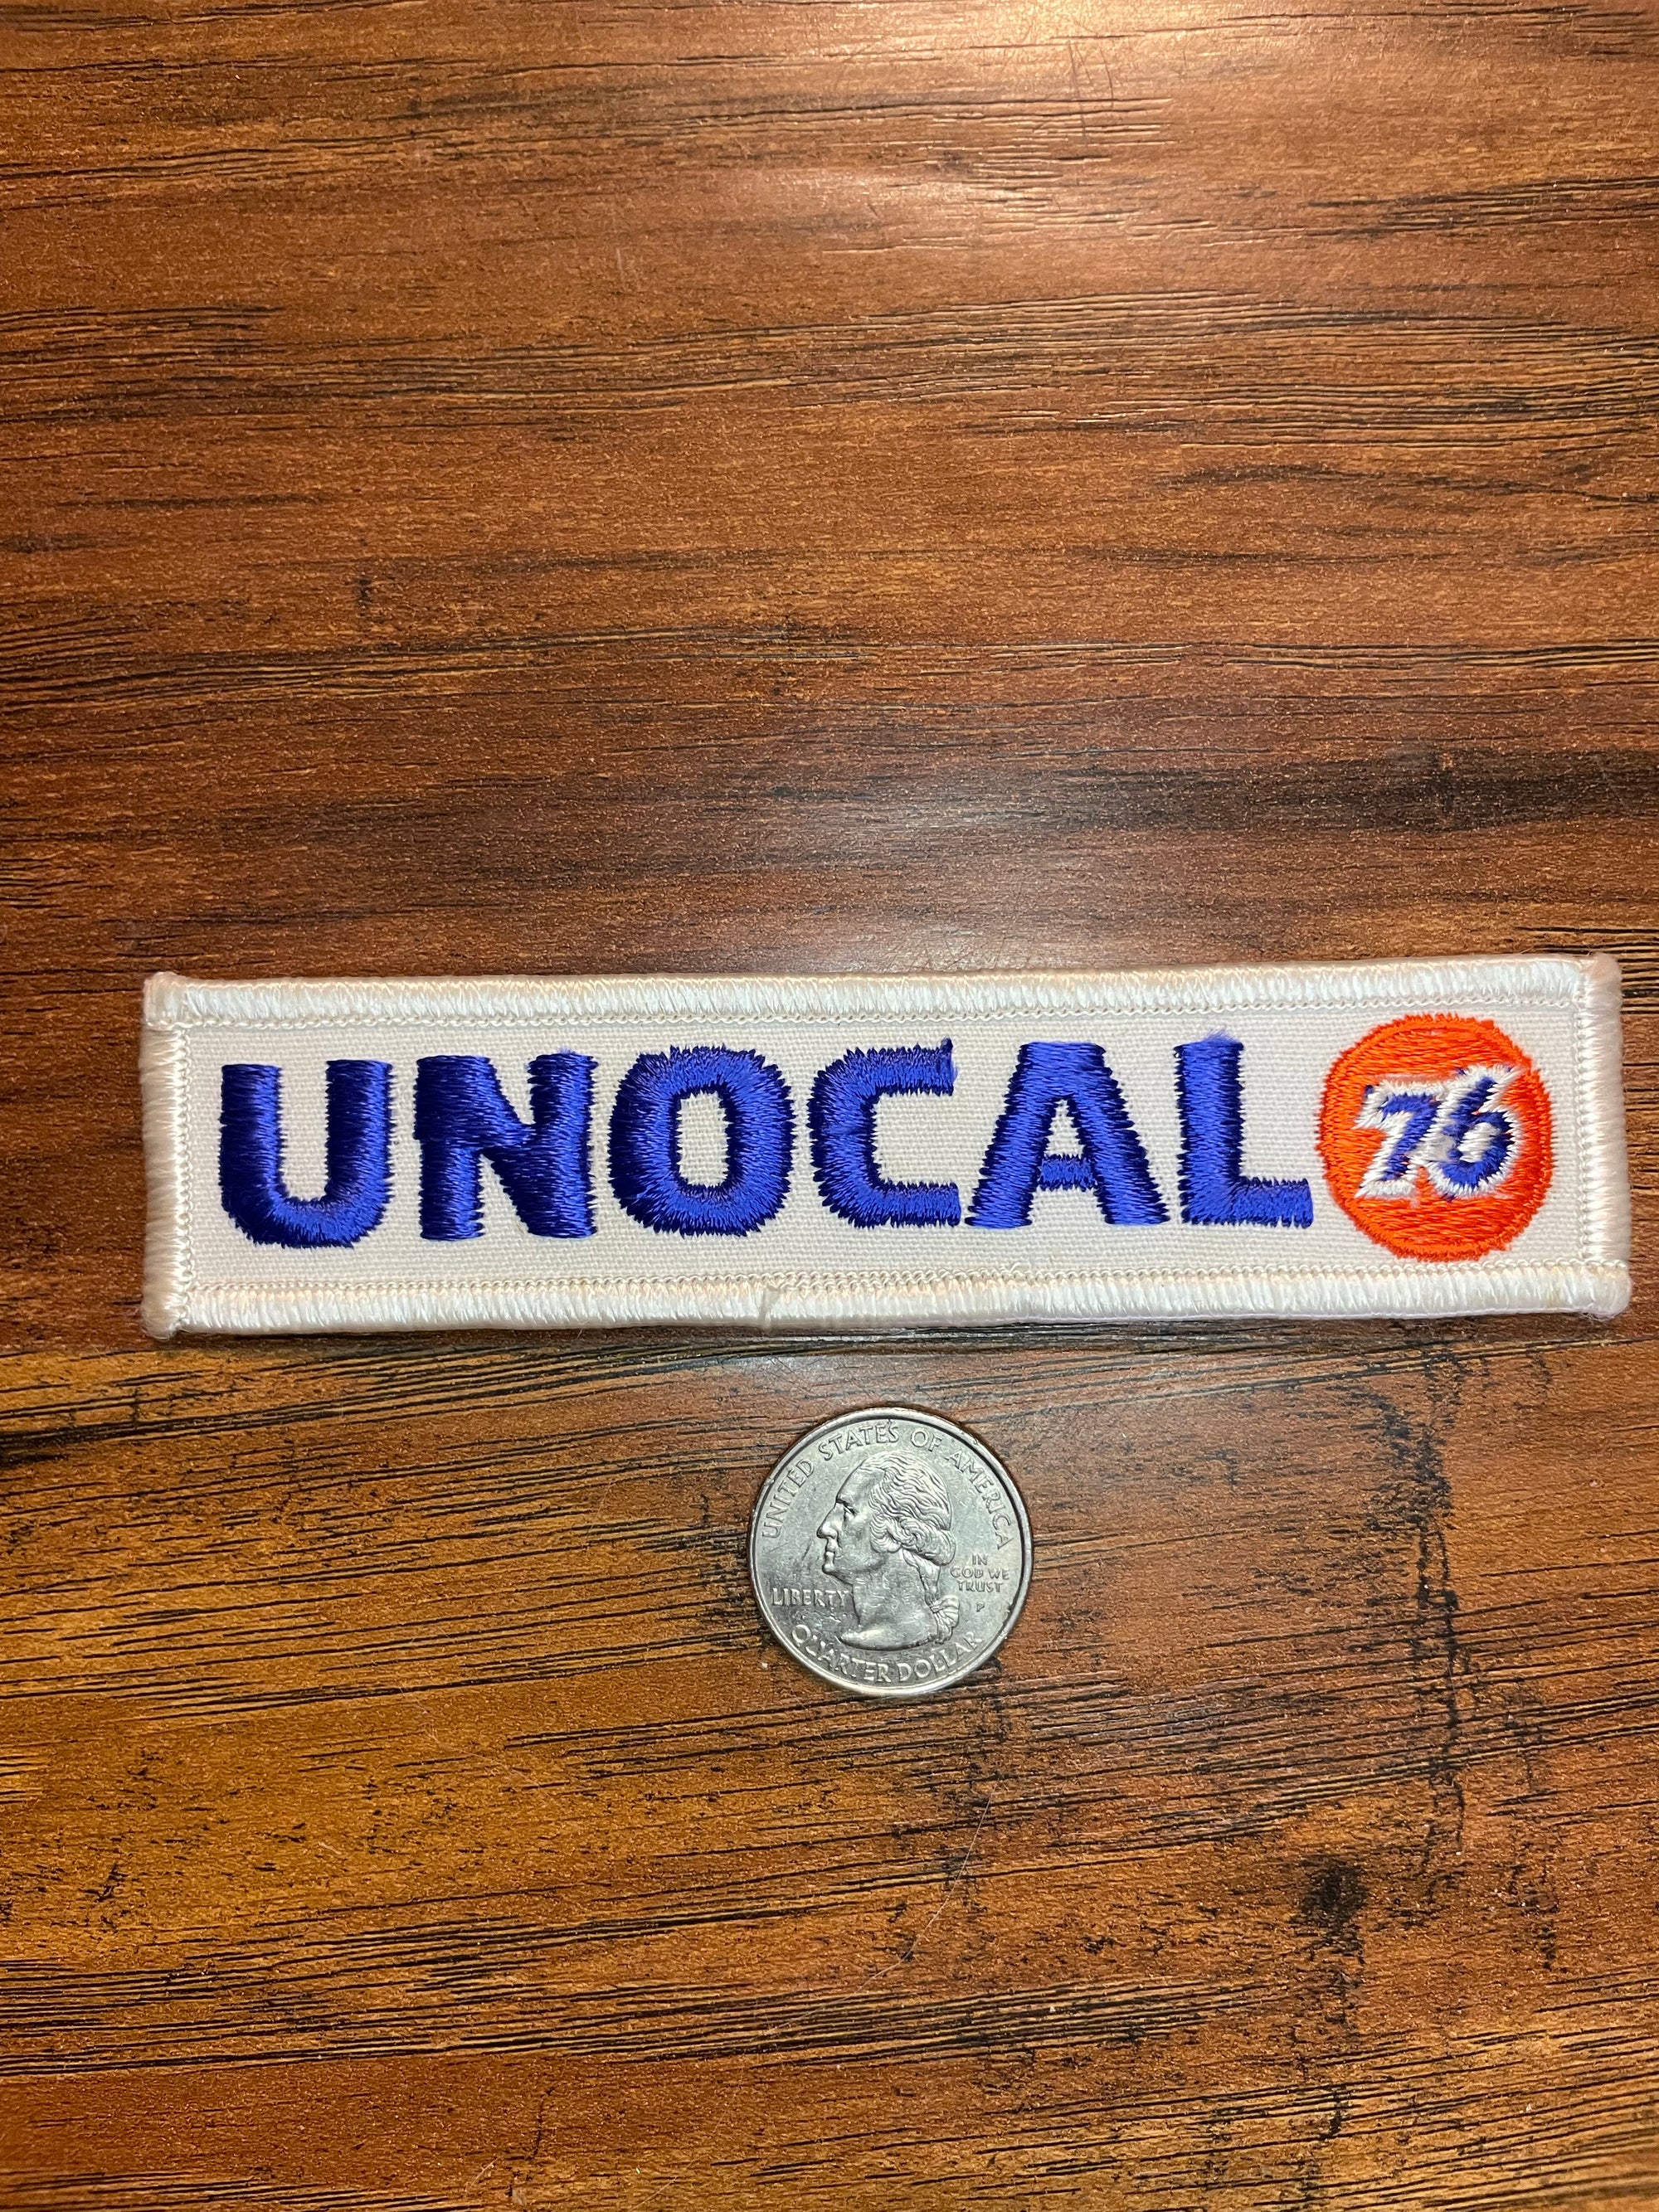 Vintage UNOCAL 76